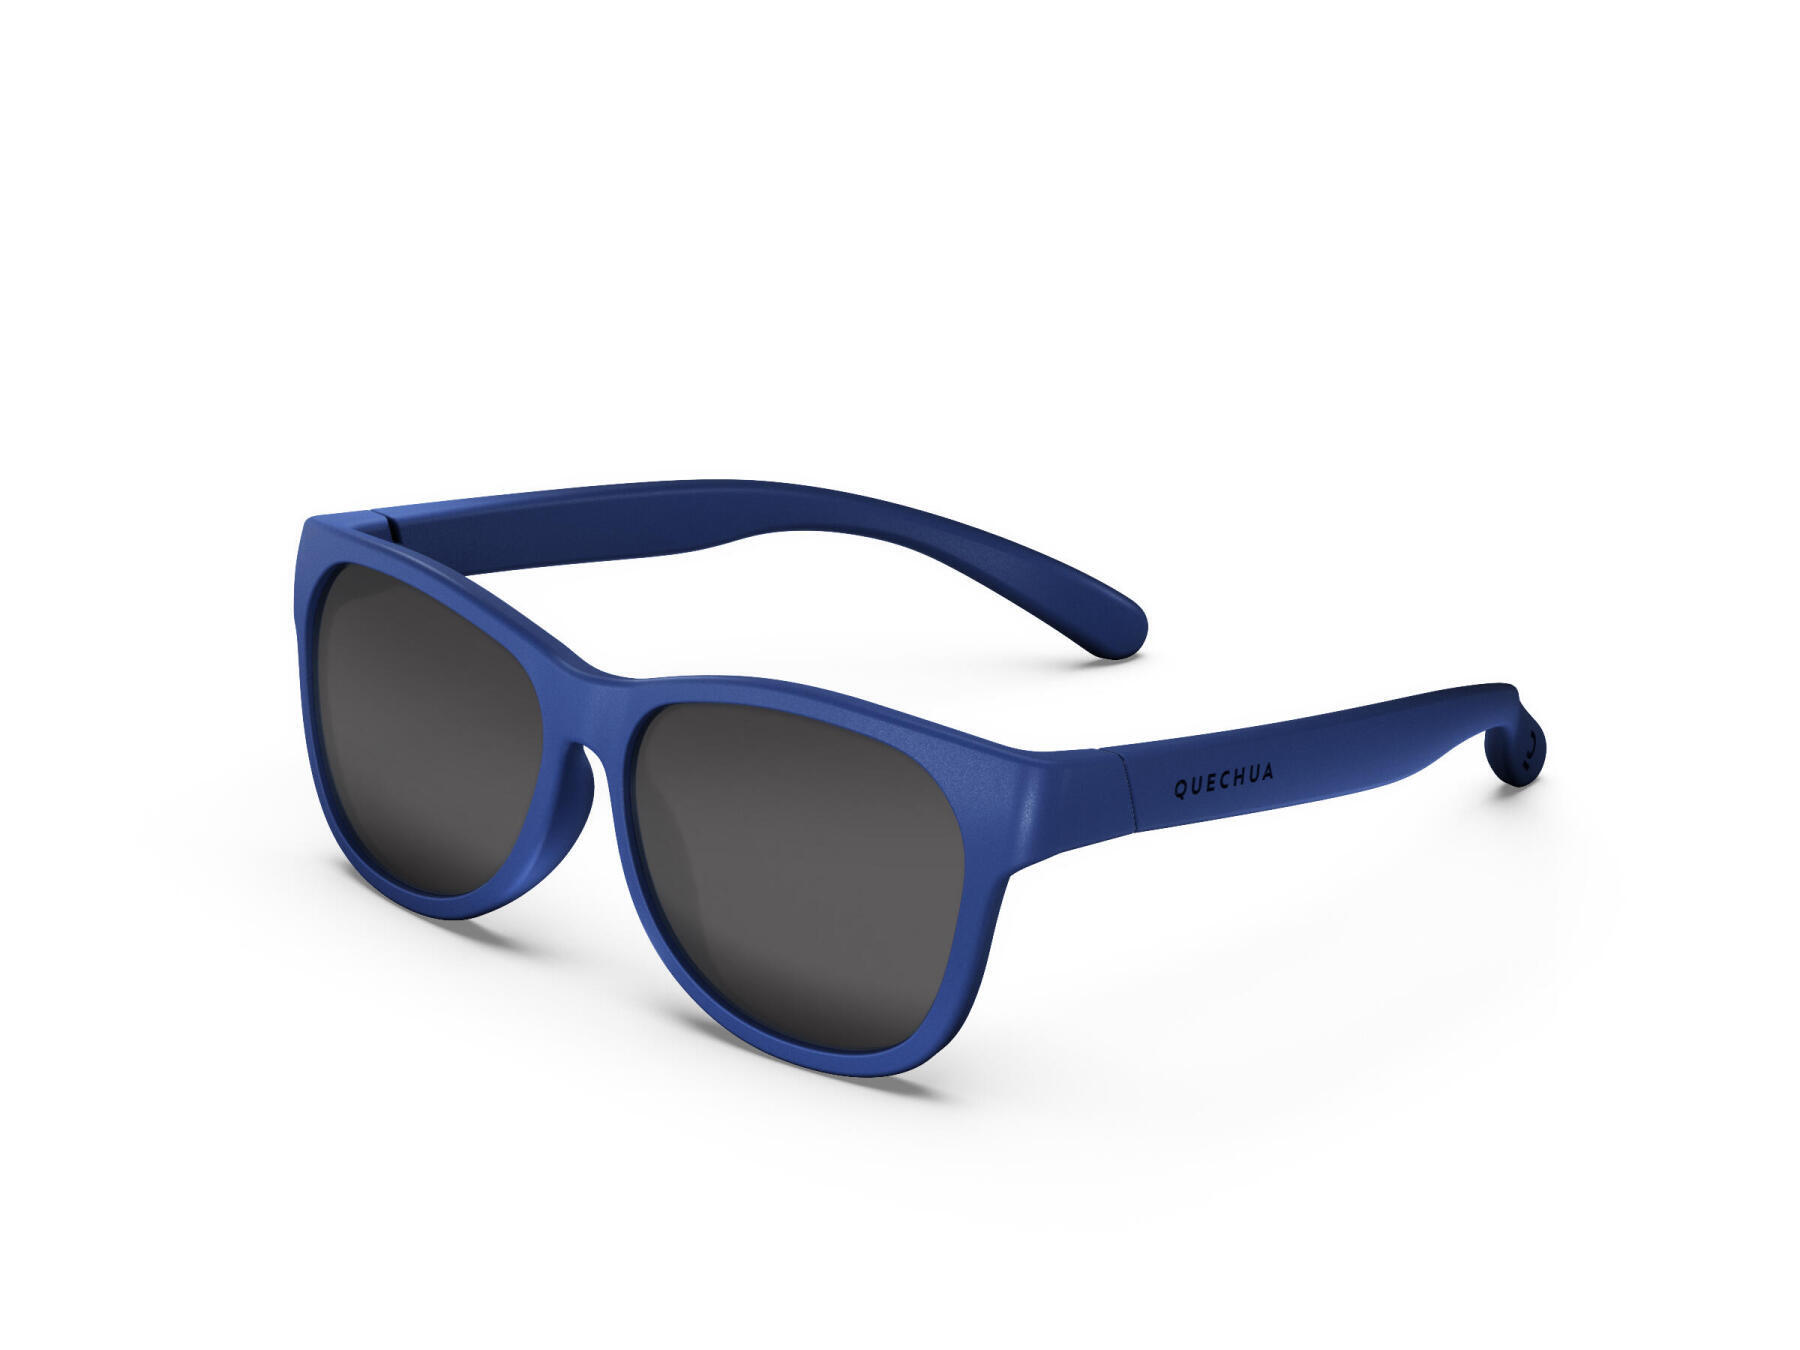 Sonnenbrille Kinder Kategorie 3 Wandern MHB140 blau 